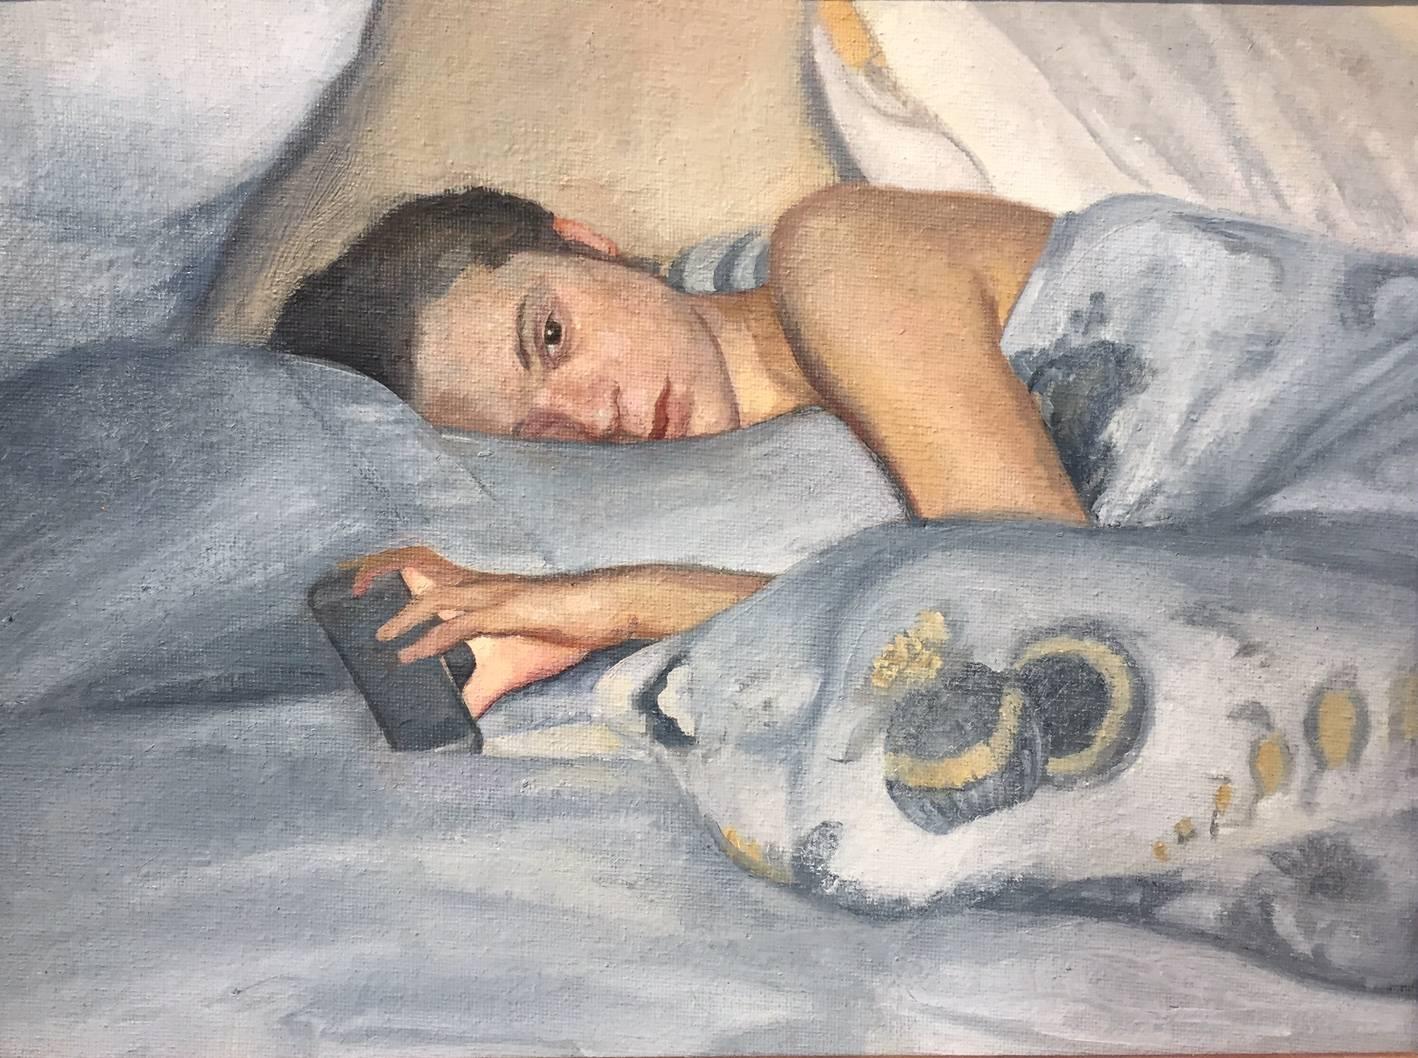 David Molesky Figurative Painting - Facetime - reclining figure with cel phone / iPhone - blue